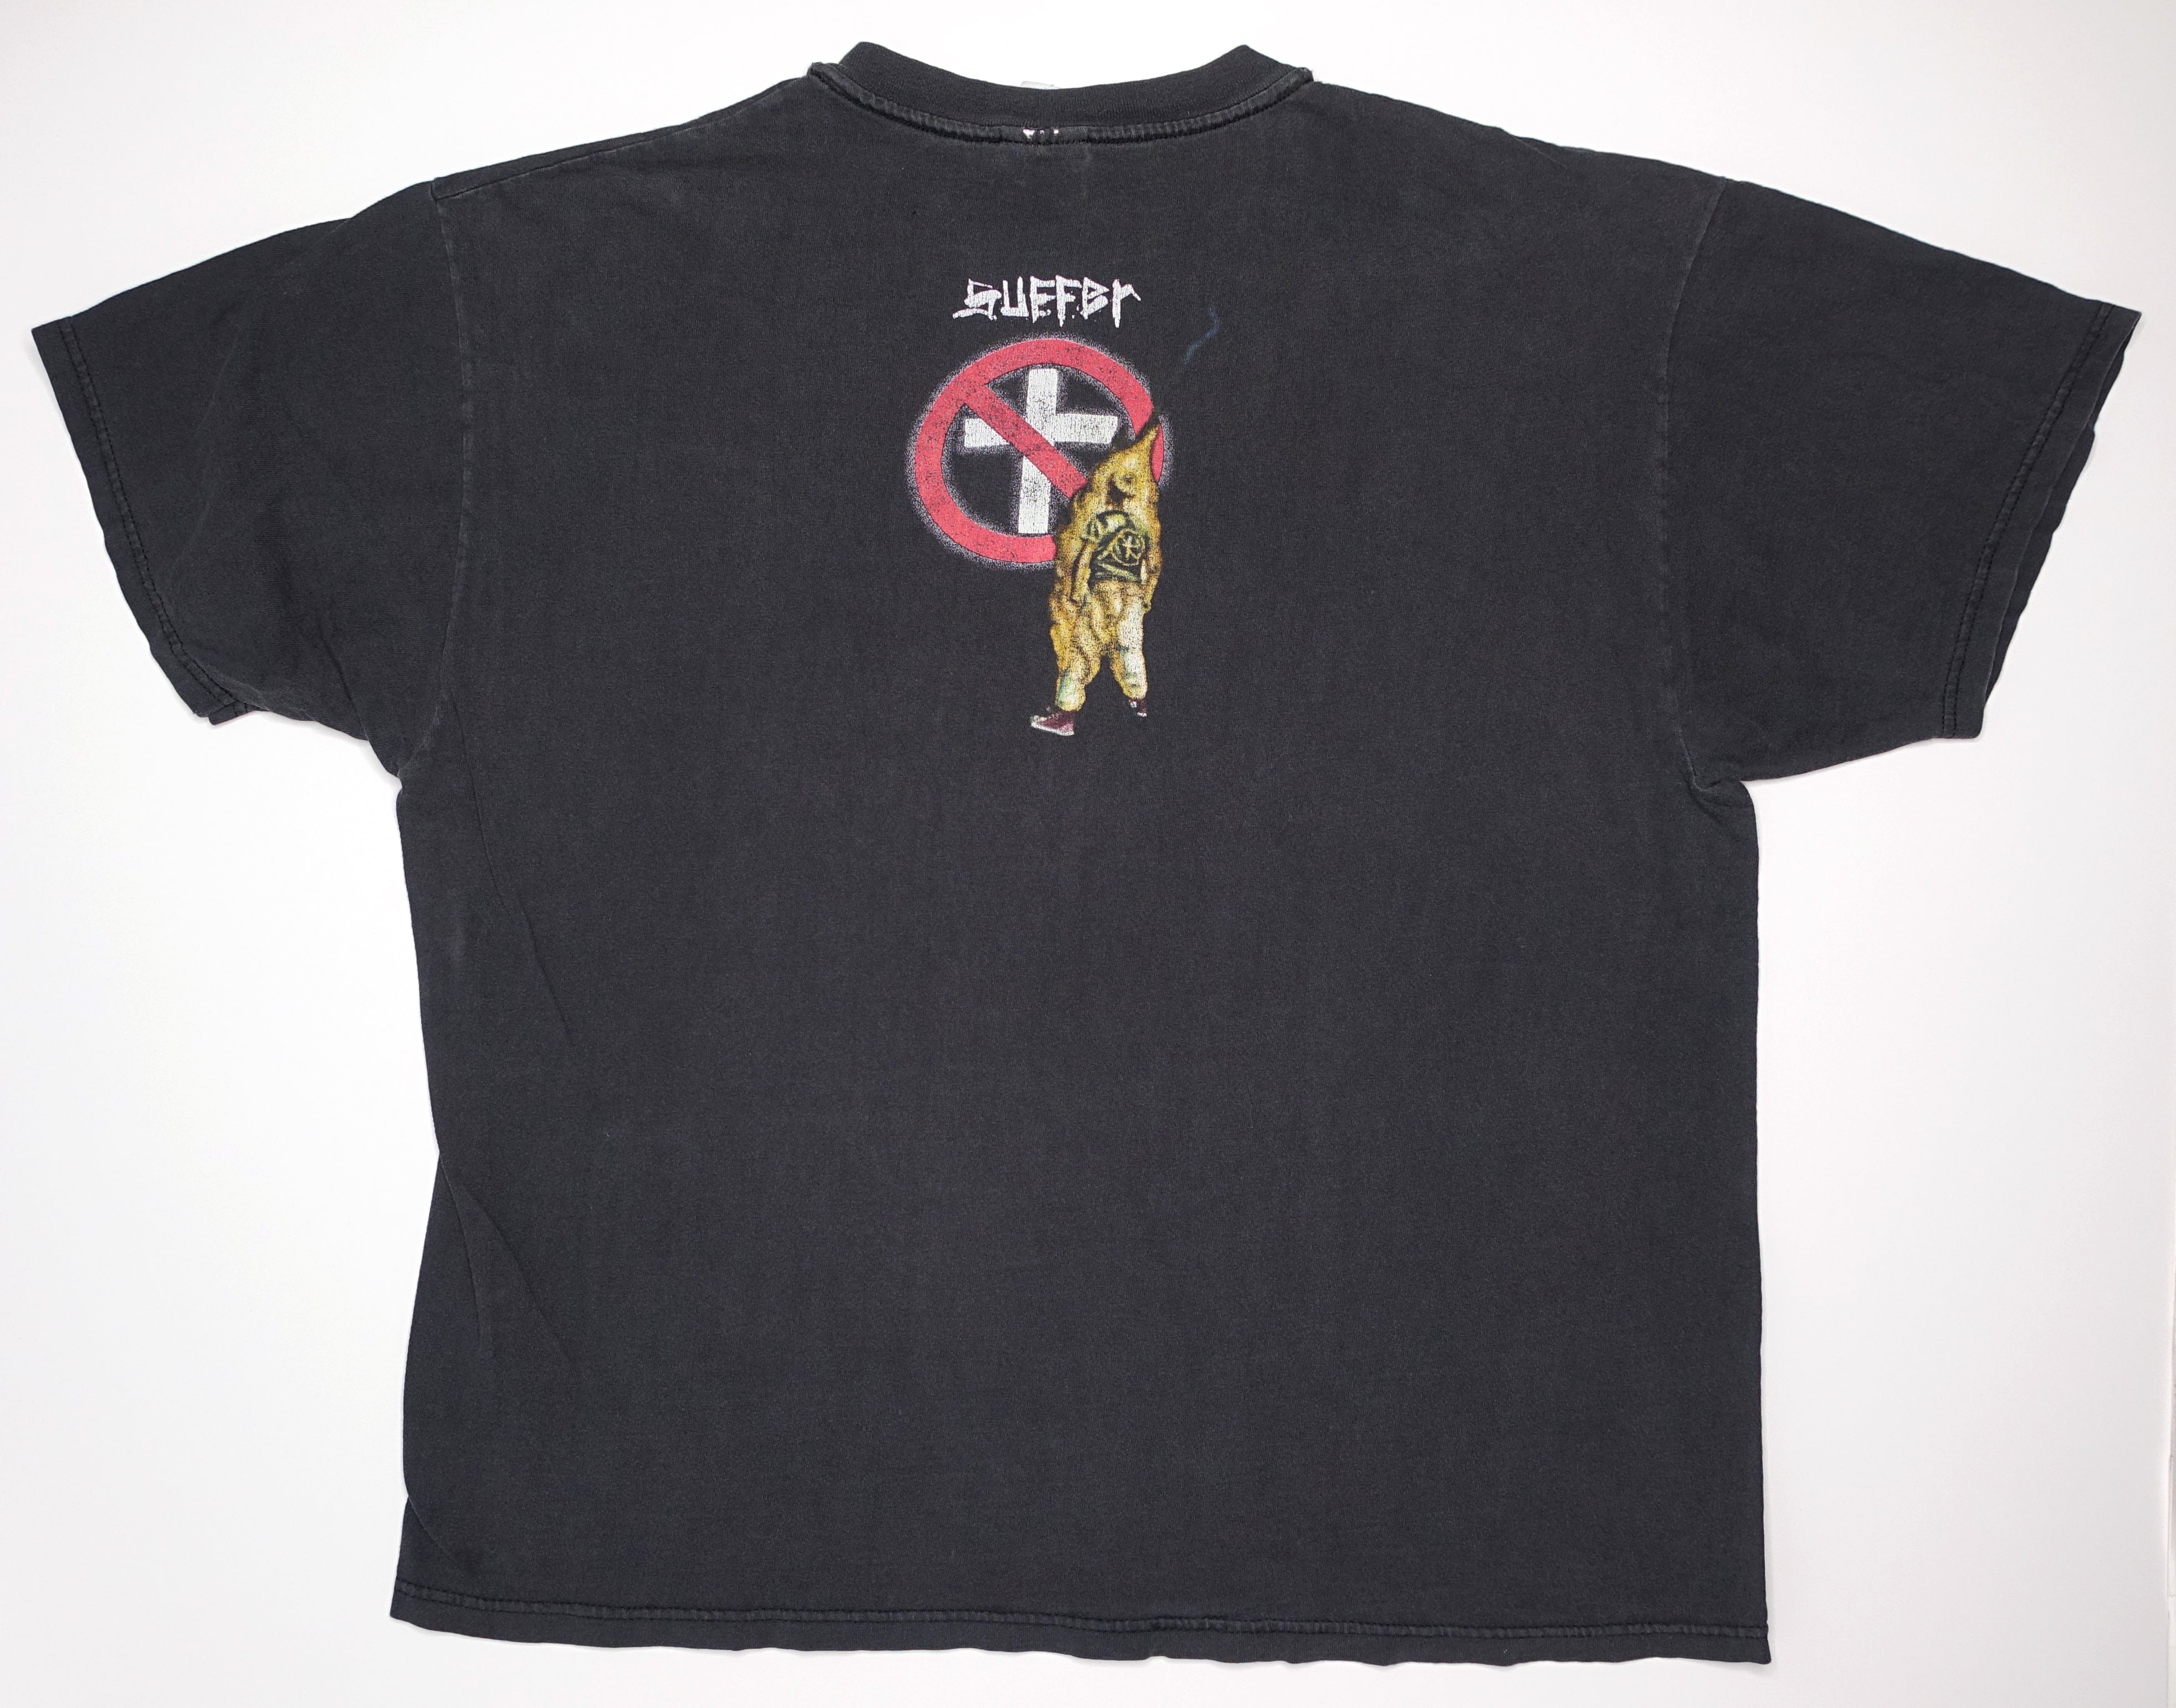 Bad Religion - Suffer 88/89 Tour Shirt Size XL